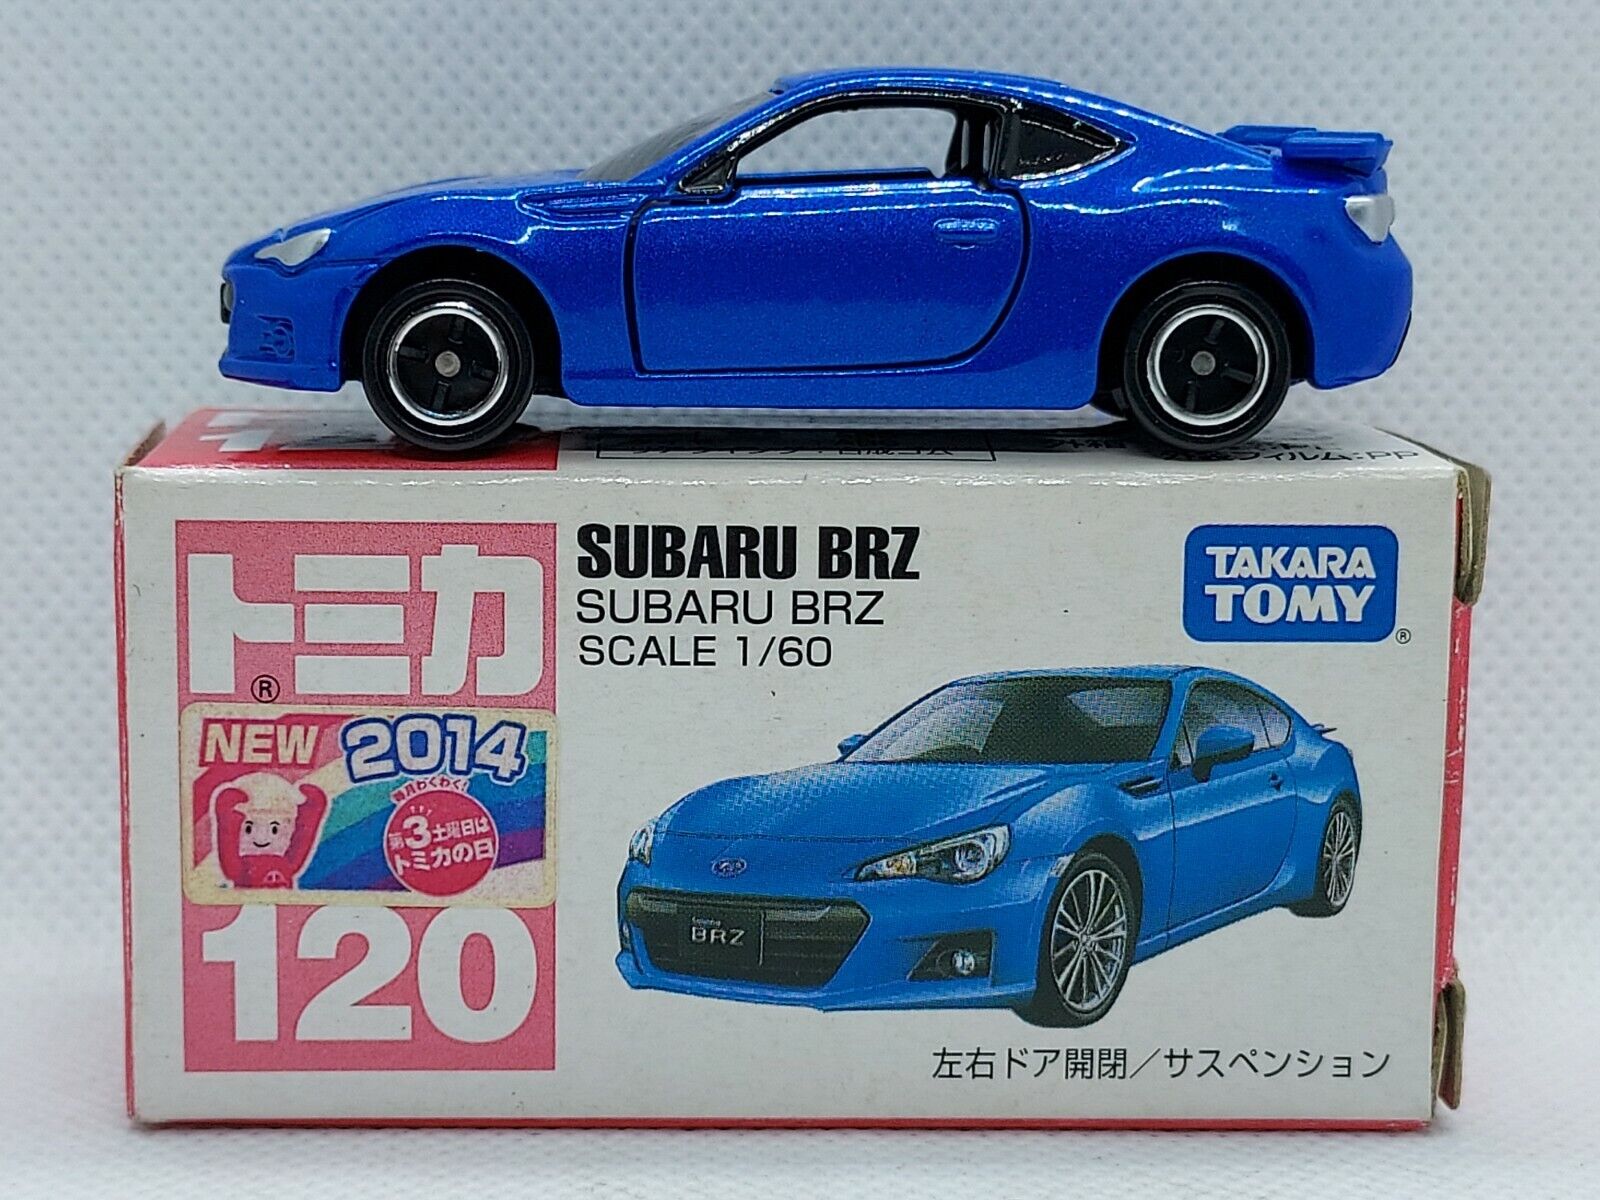 Tomica Red Box No. 120 Subaru BRZ with 2014 Japan Sticker